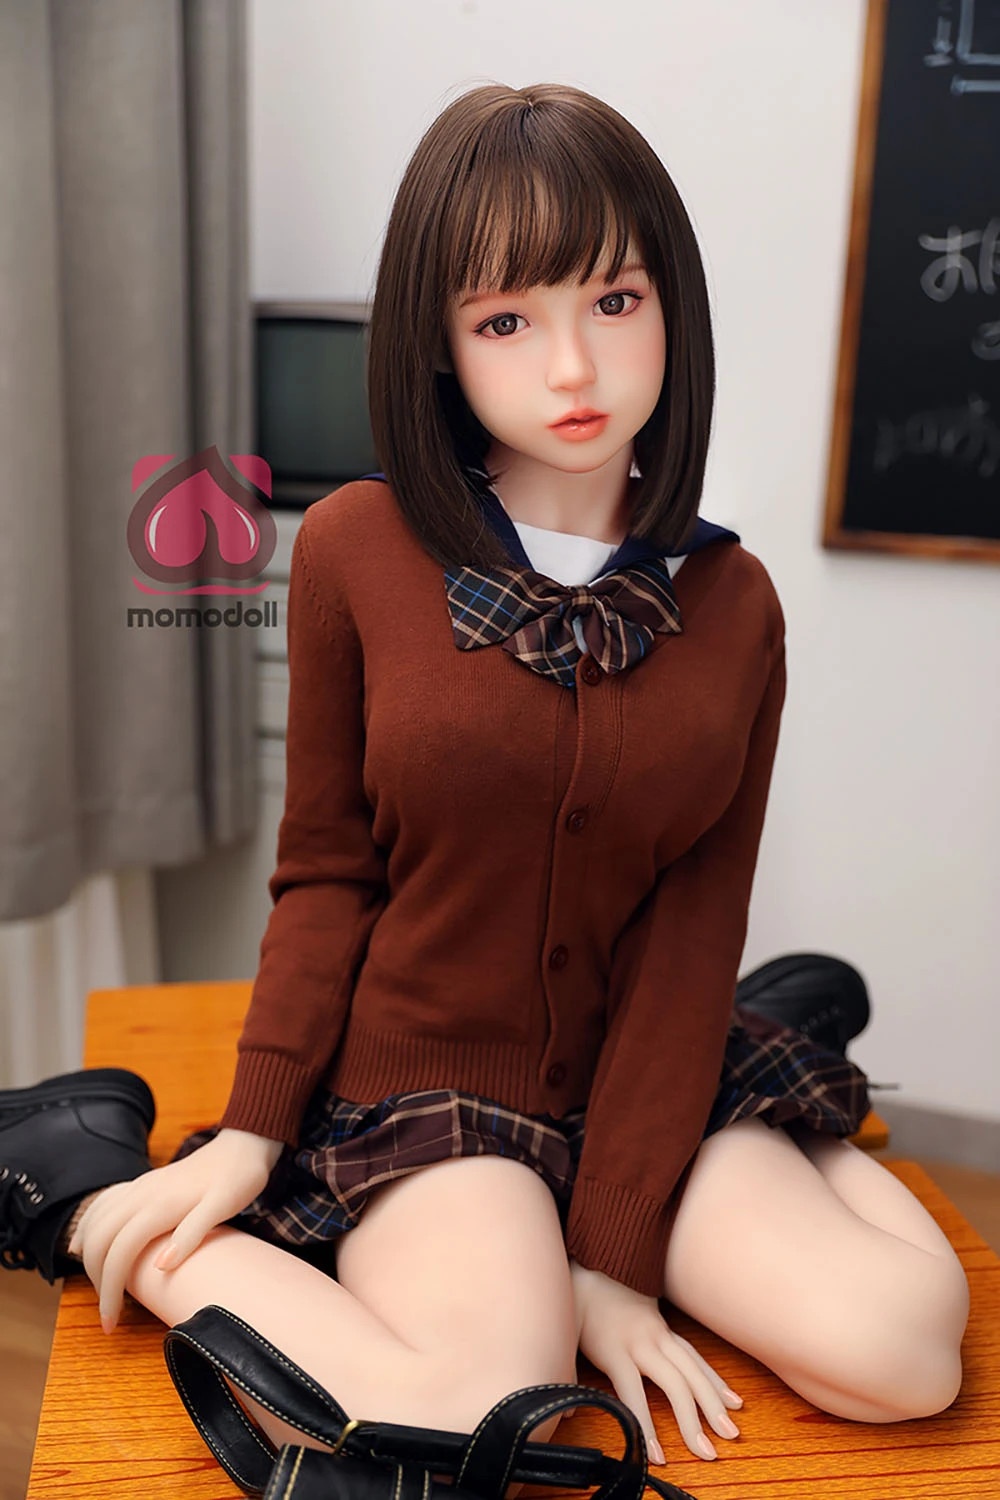  Korean sex doll